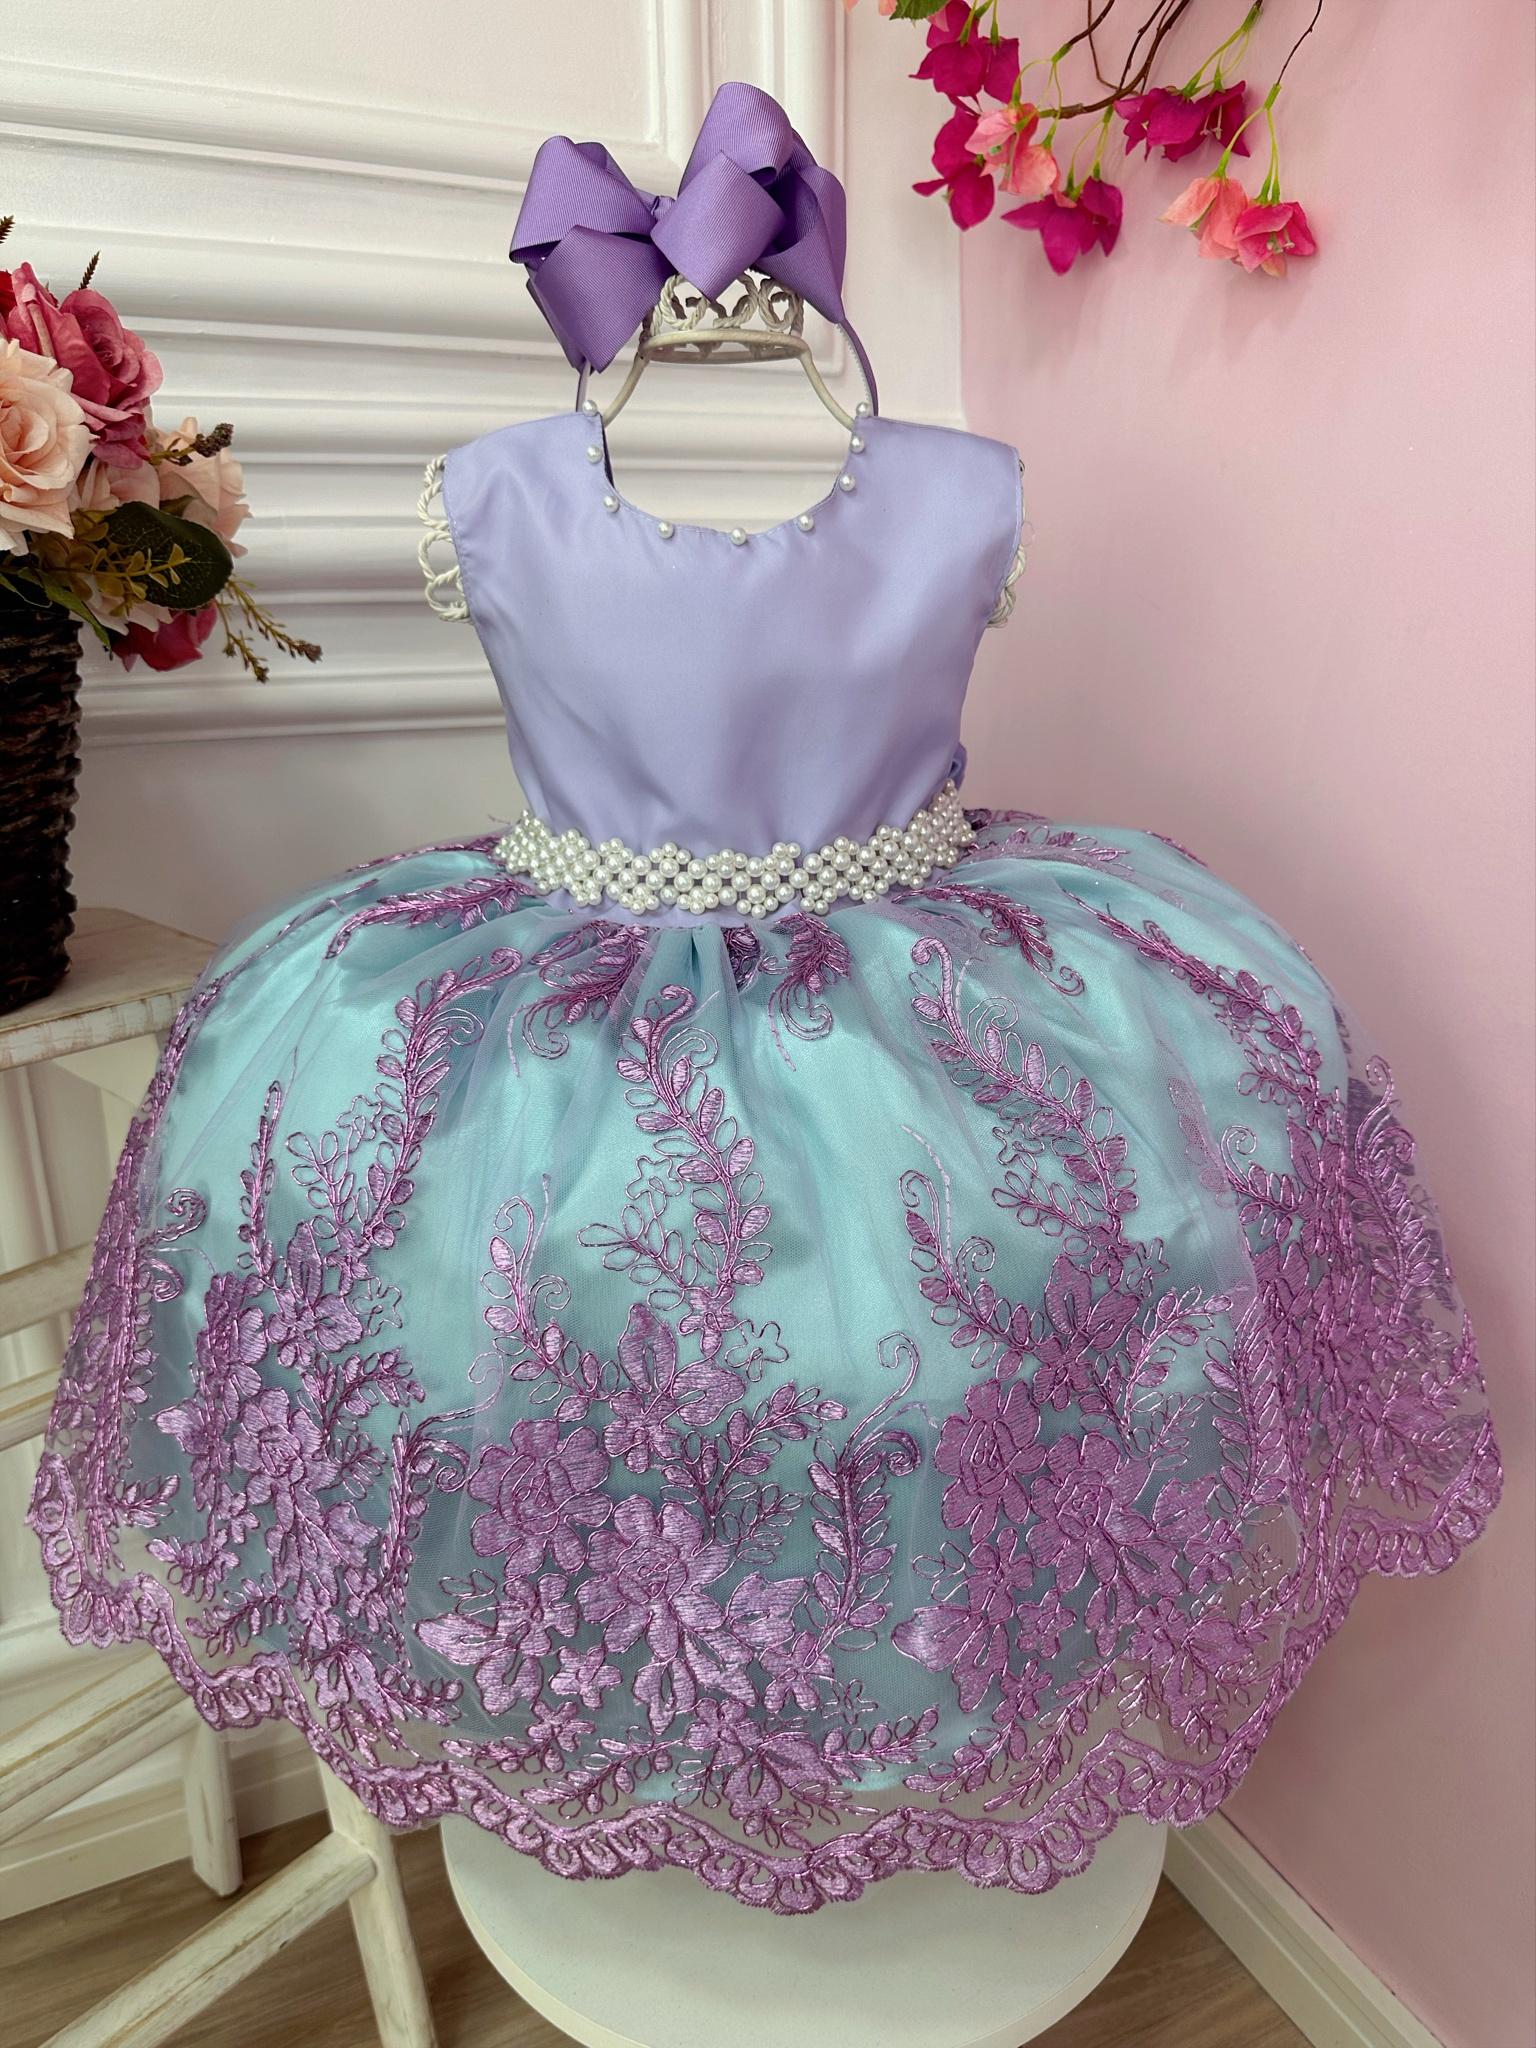 Vestido Infantil Ariel Princesa C/ Renda e Cinto de Pérolas